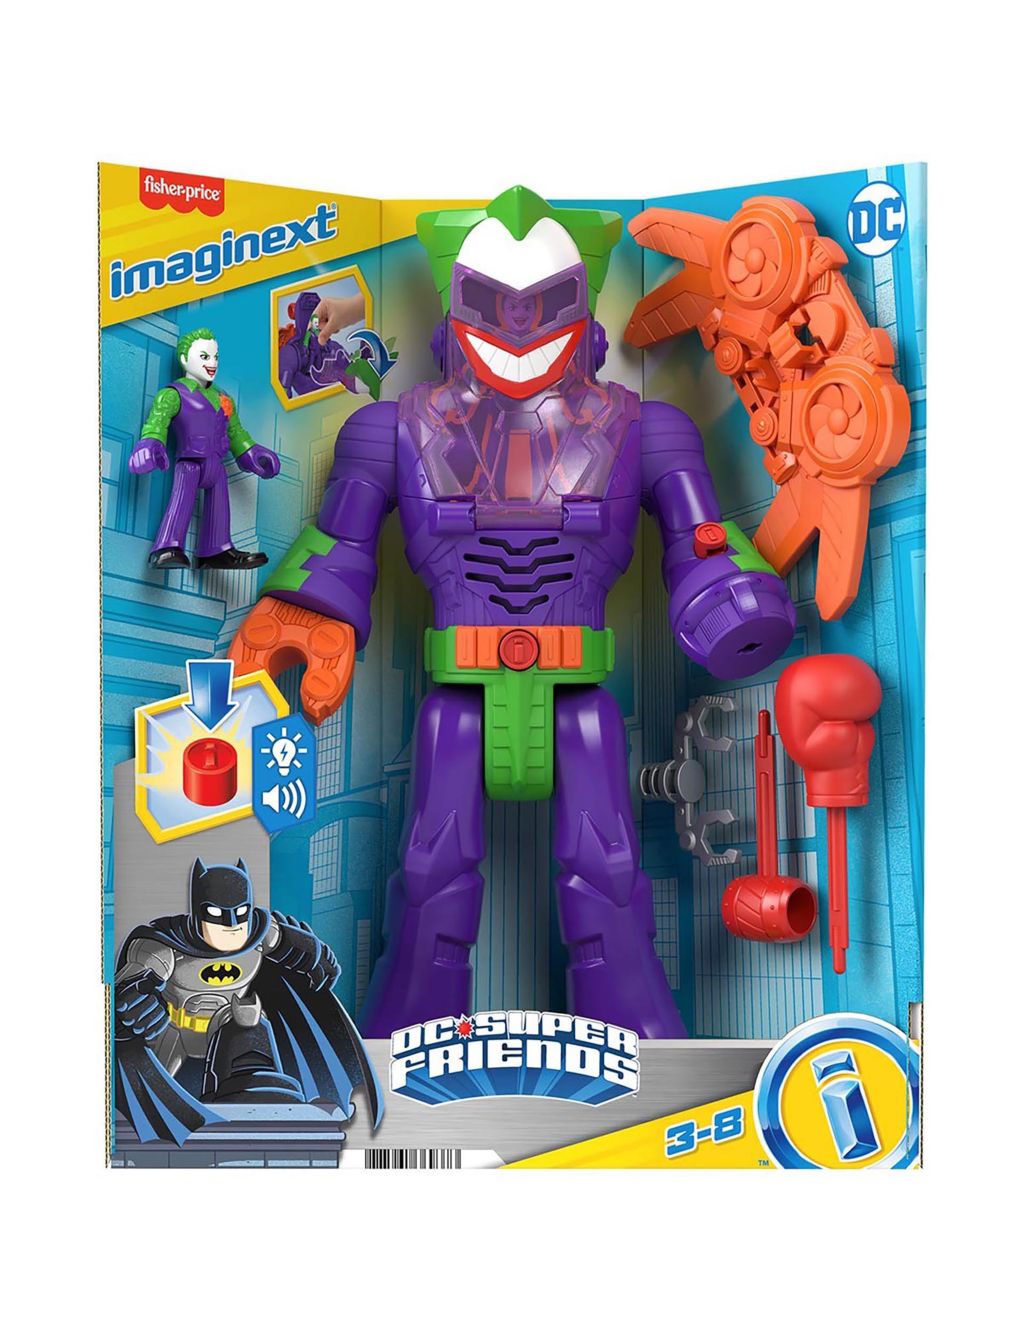 Joker Insider & LaffBot Robot Set (3-8 Yrs)